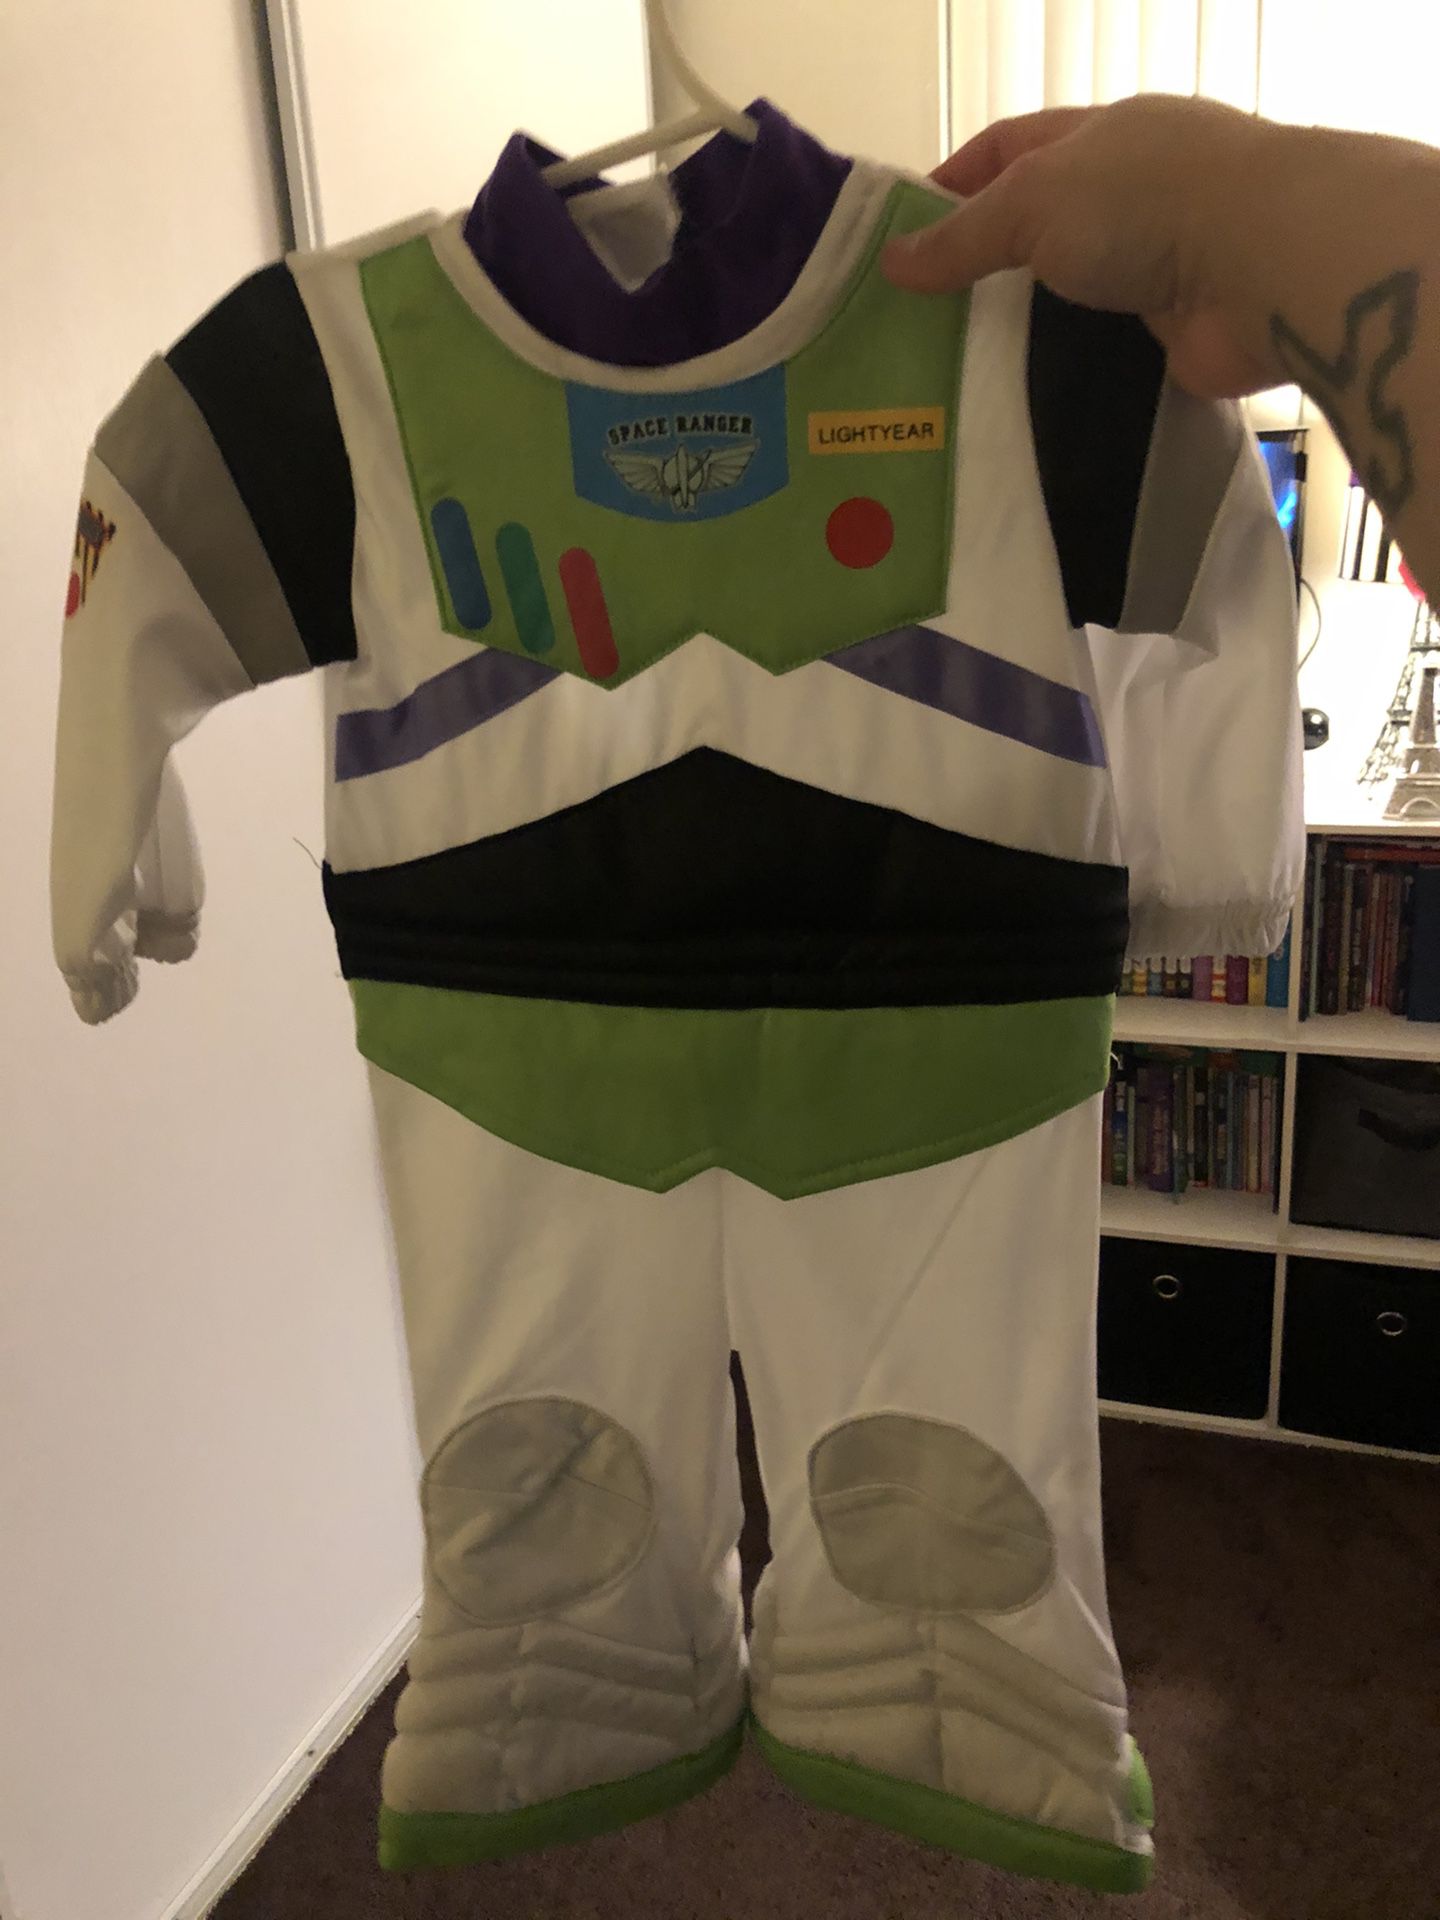 Buzz lightyear costume 6-12 months